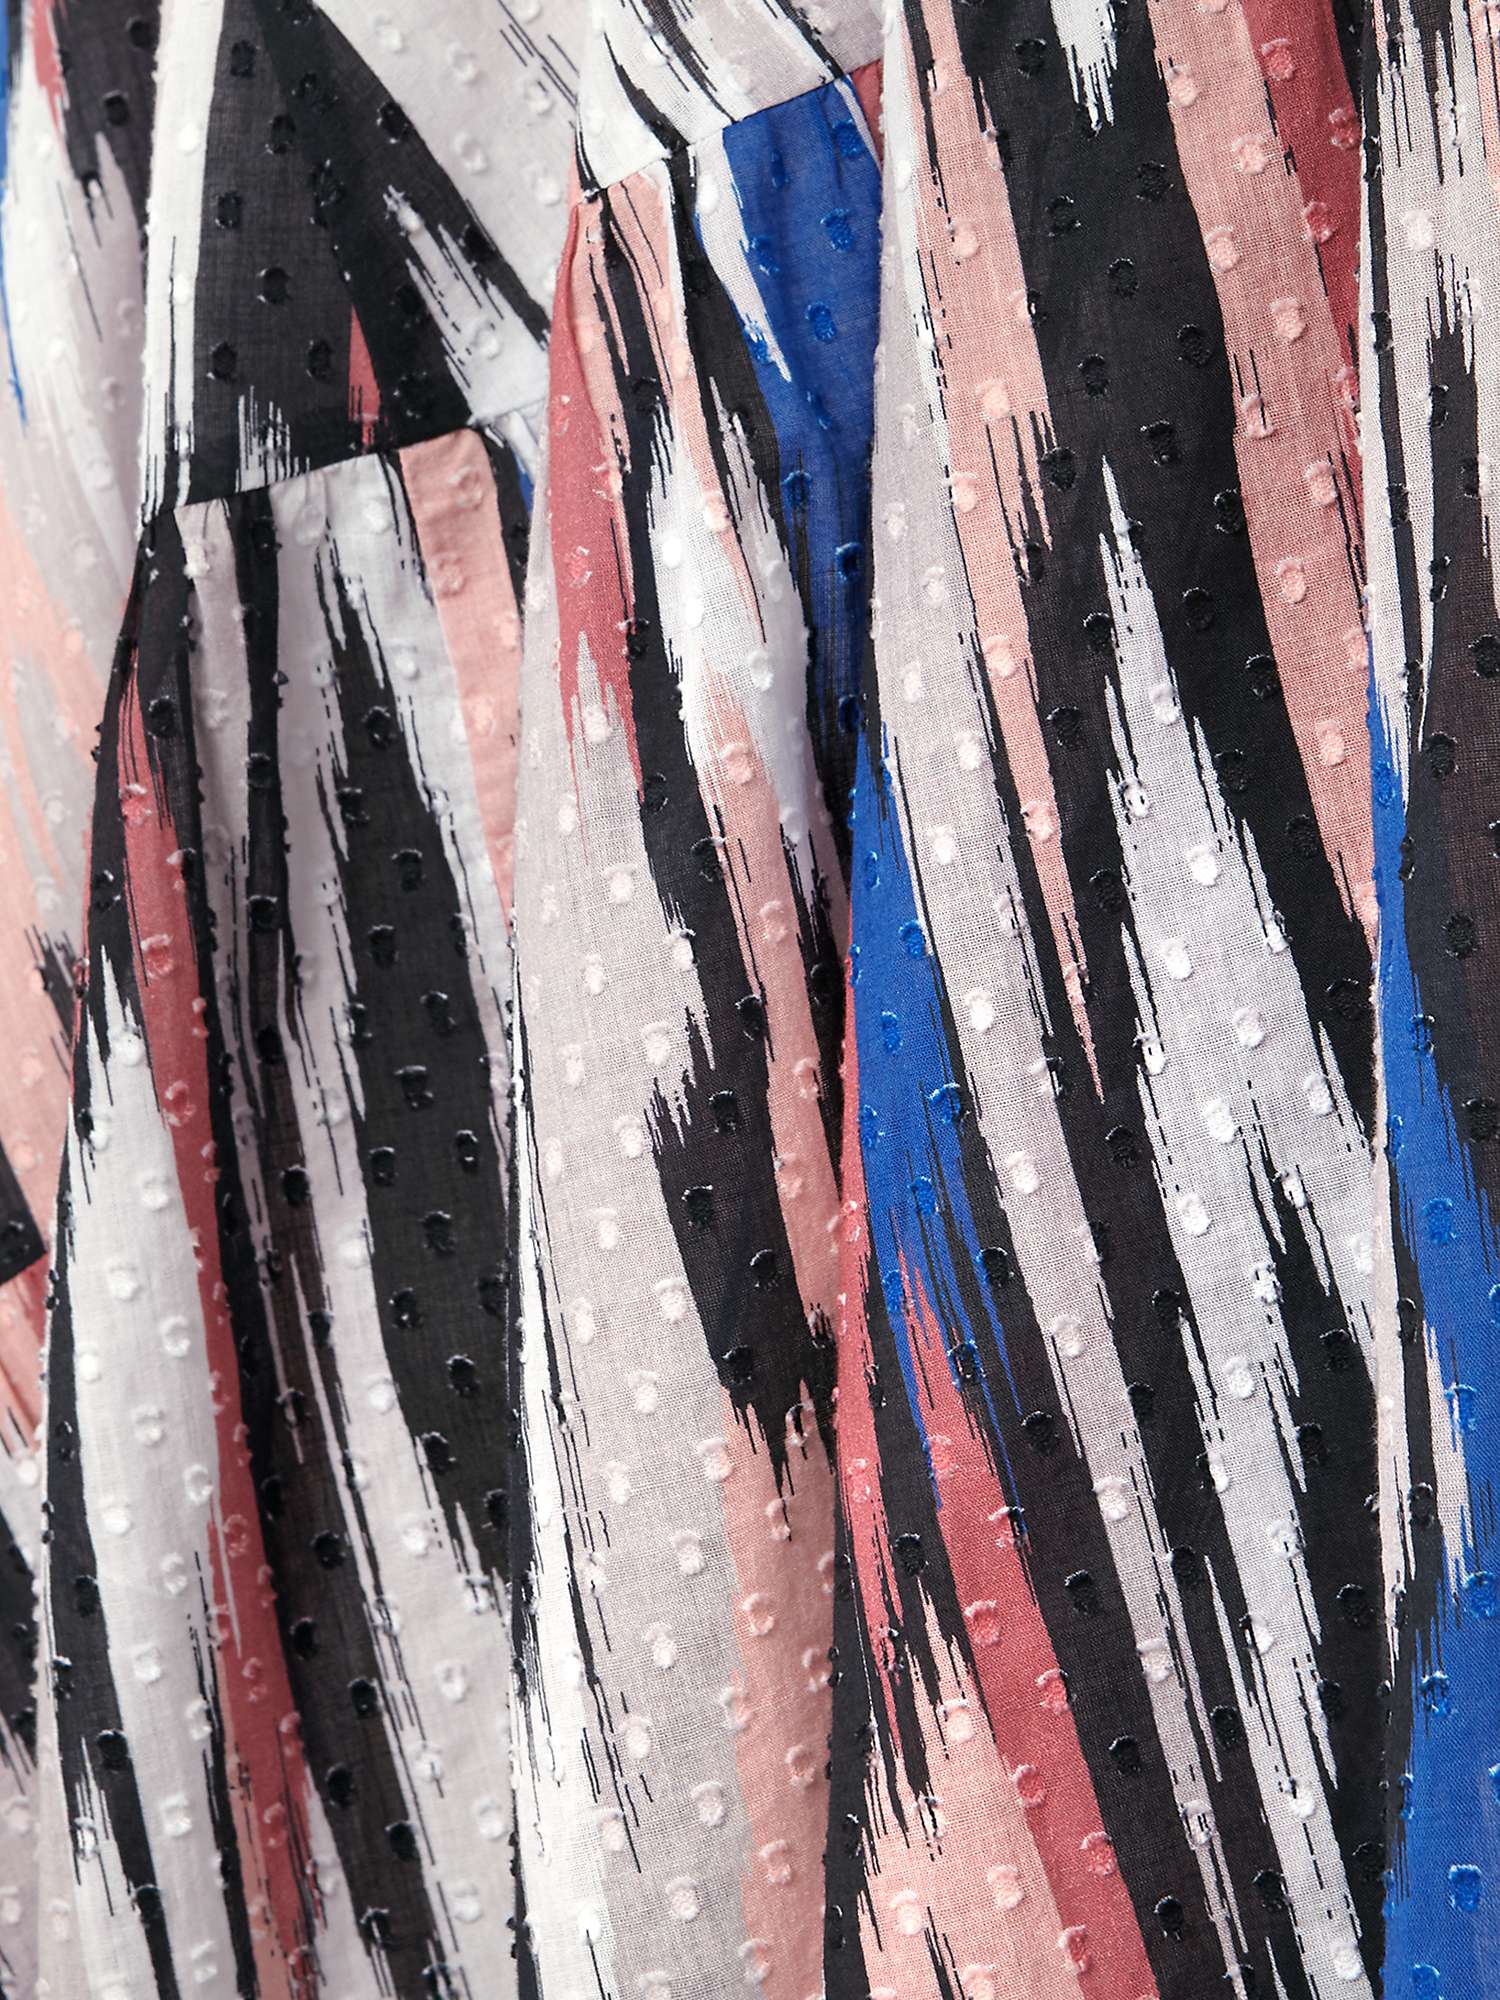 Buy Phase Eight Caityln Ikat Wrap Midi Dress, Multi Online at johnlewis.com